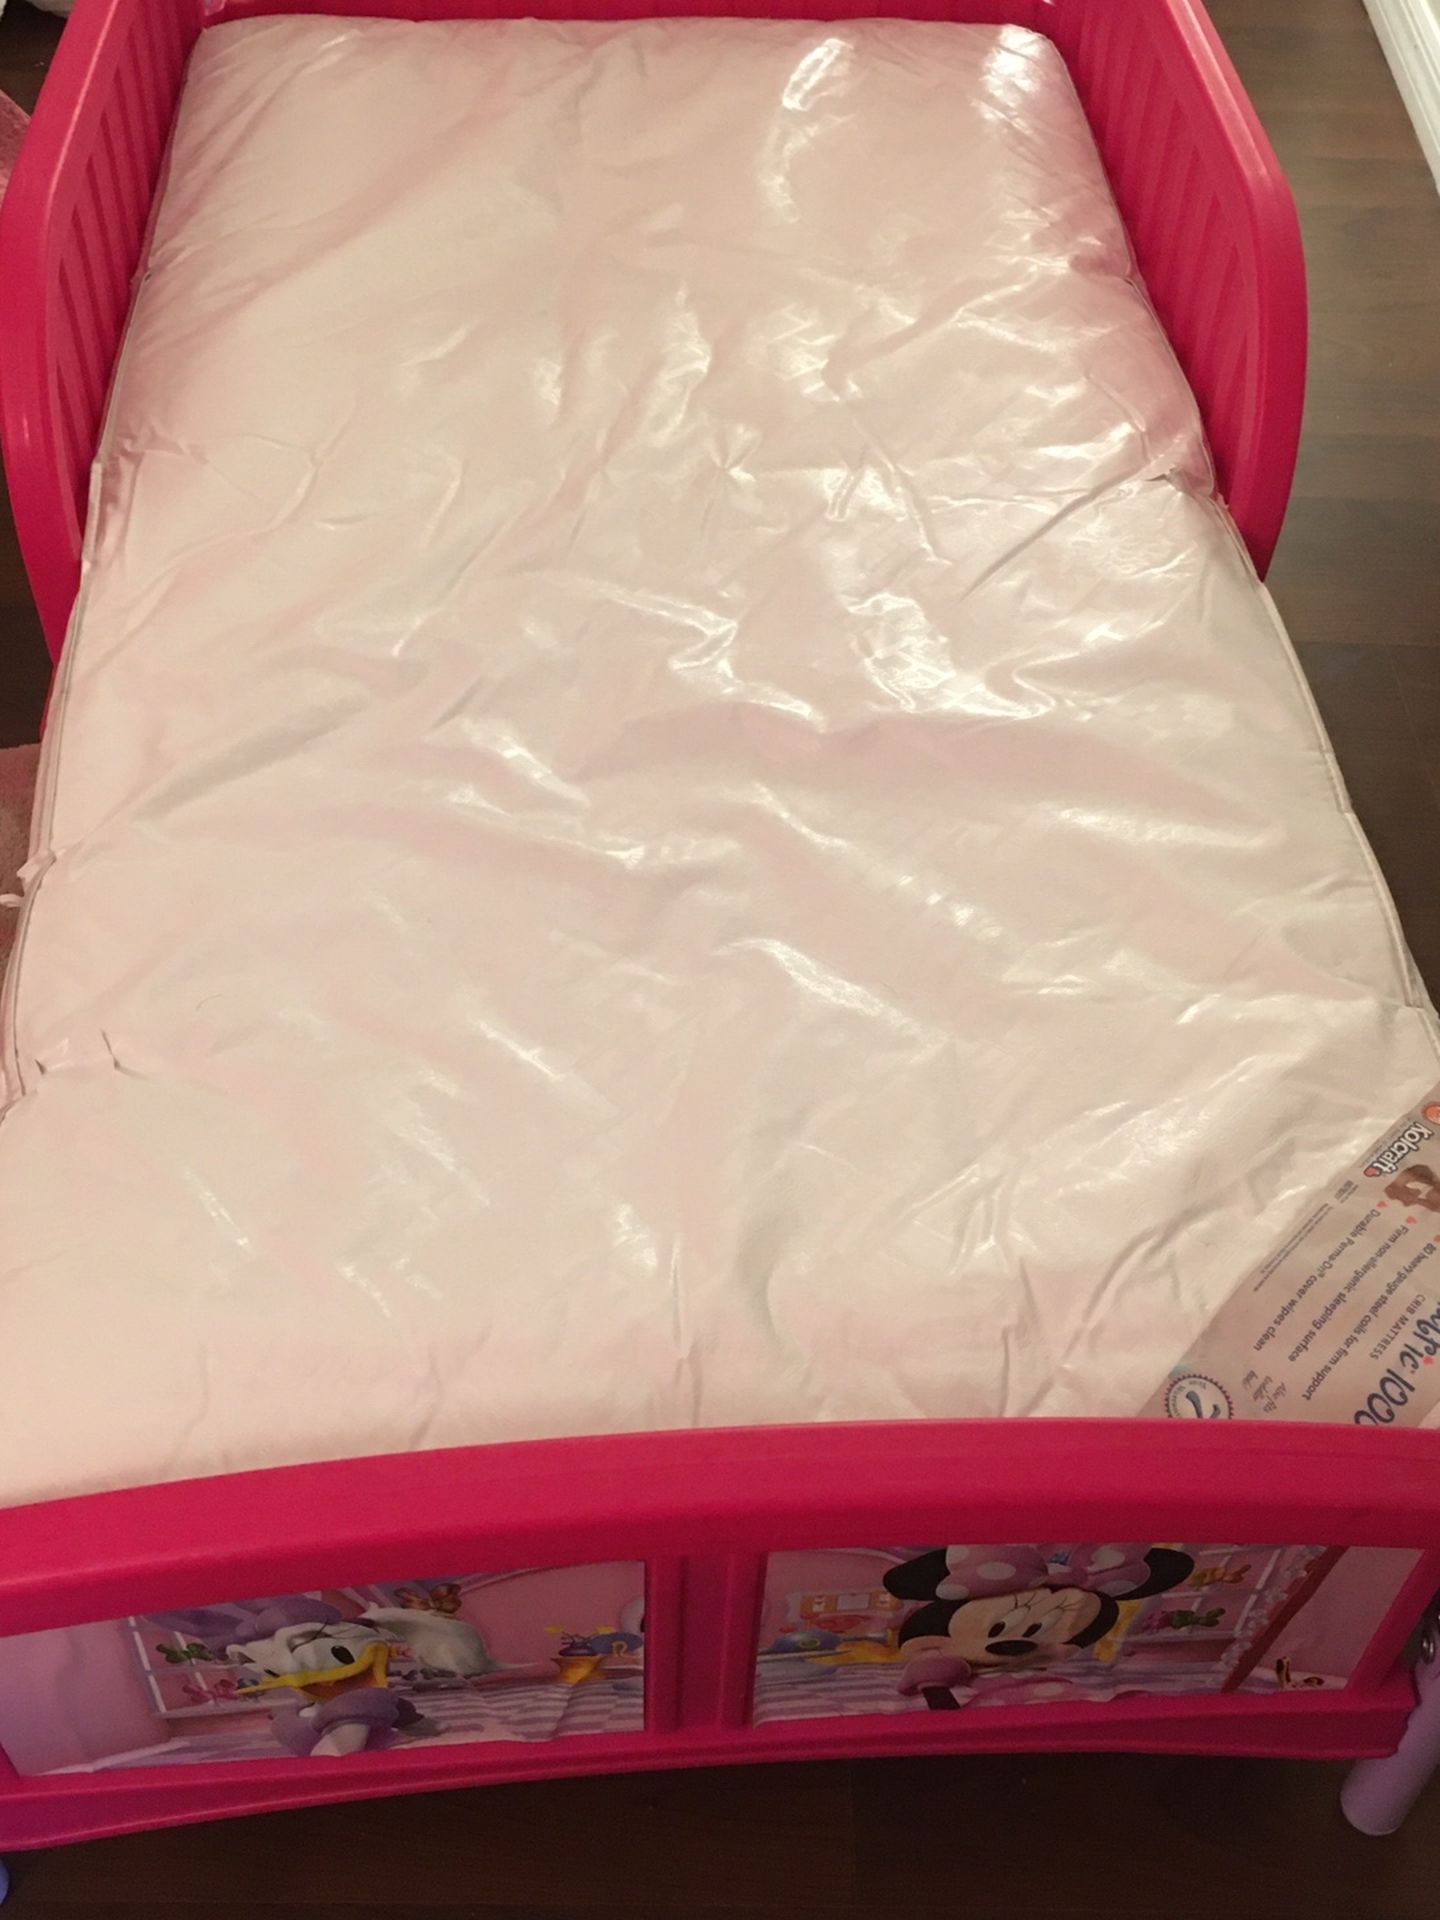 Disney Toddler Bed With Crib Mattress